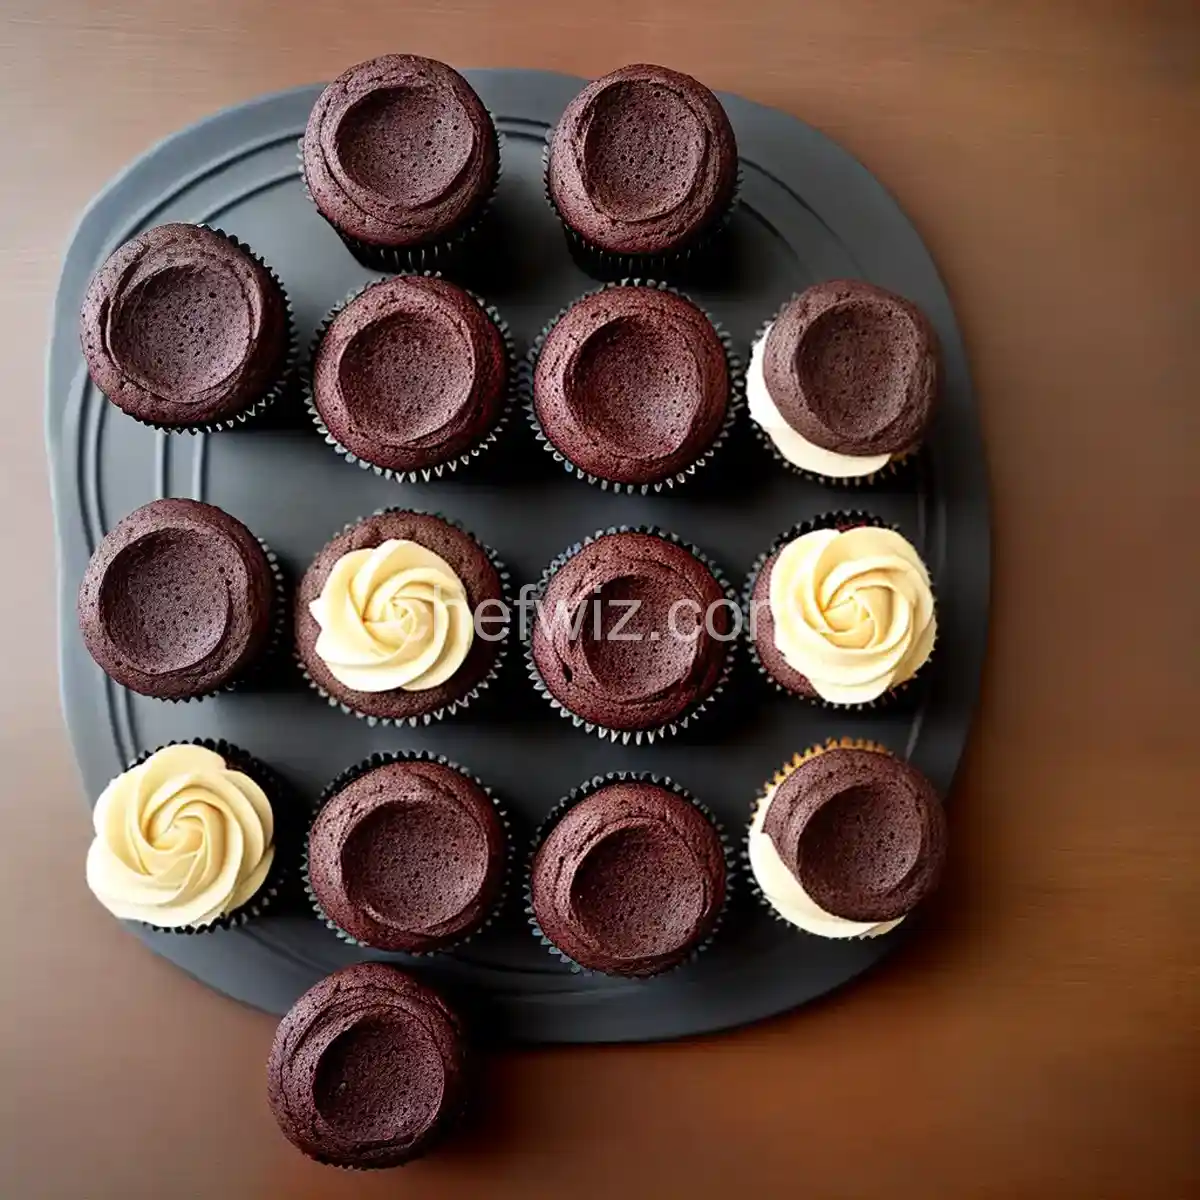 Black Bottom Cupcakes compressed image1